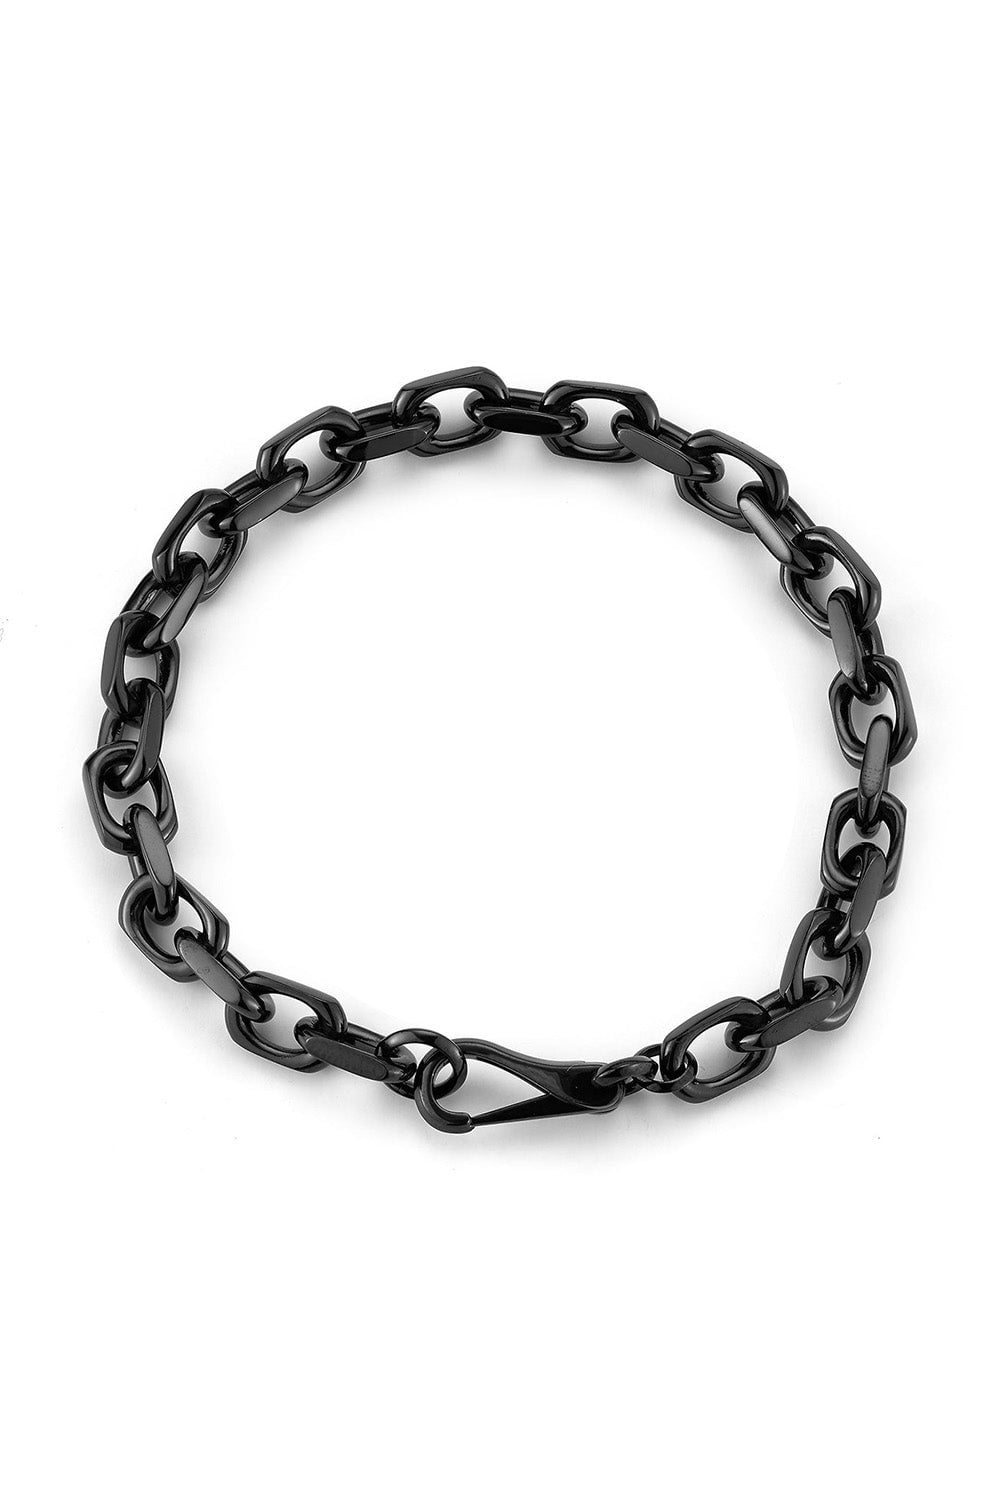 WALTERS FAITH-Saxon Cable Chain Link Bracelet-SILVER